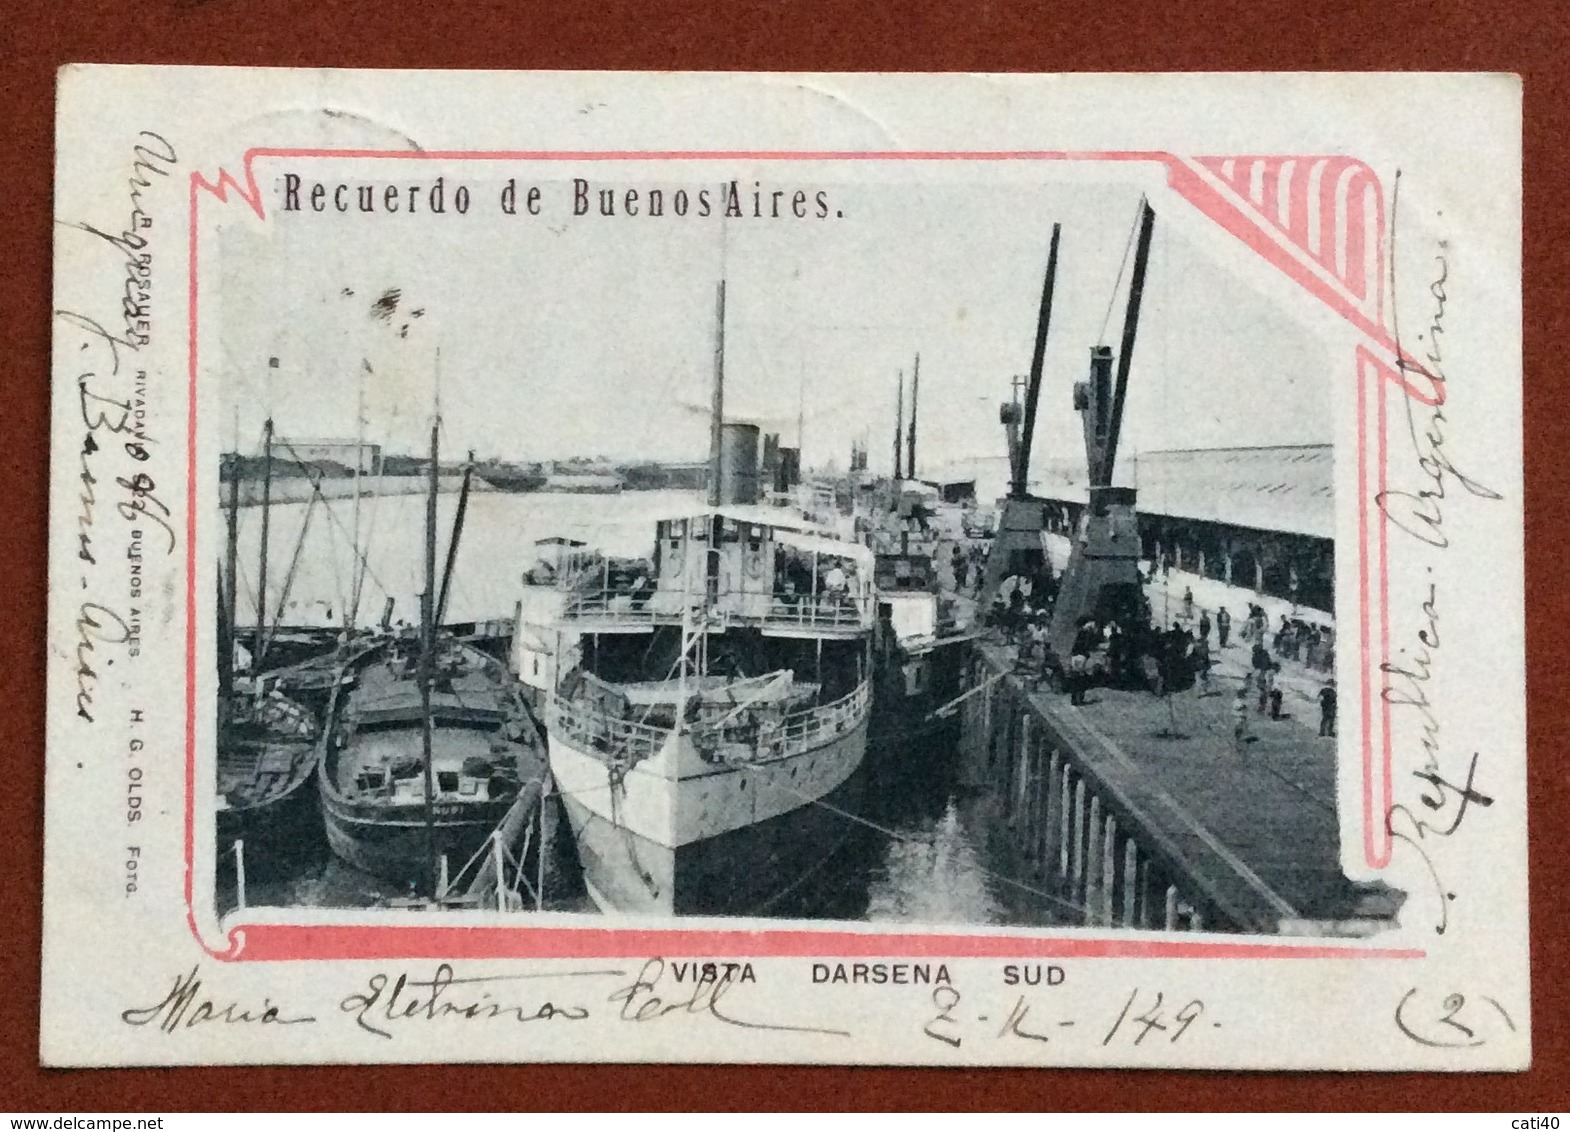 RECUERDO DE BUENOS AIRES  VISTA DARSENA SUD  CON PIROSCAFO  FROM ALTA GRACIA  TO RAVENNA ITALY   11/5/1902 - Argentina